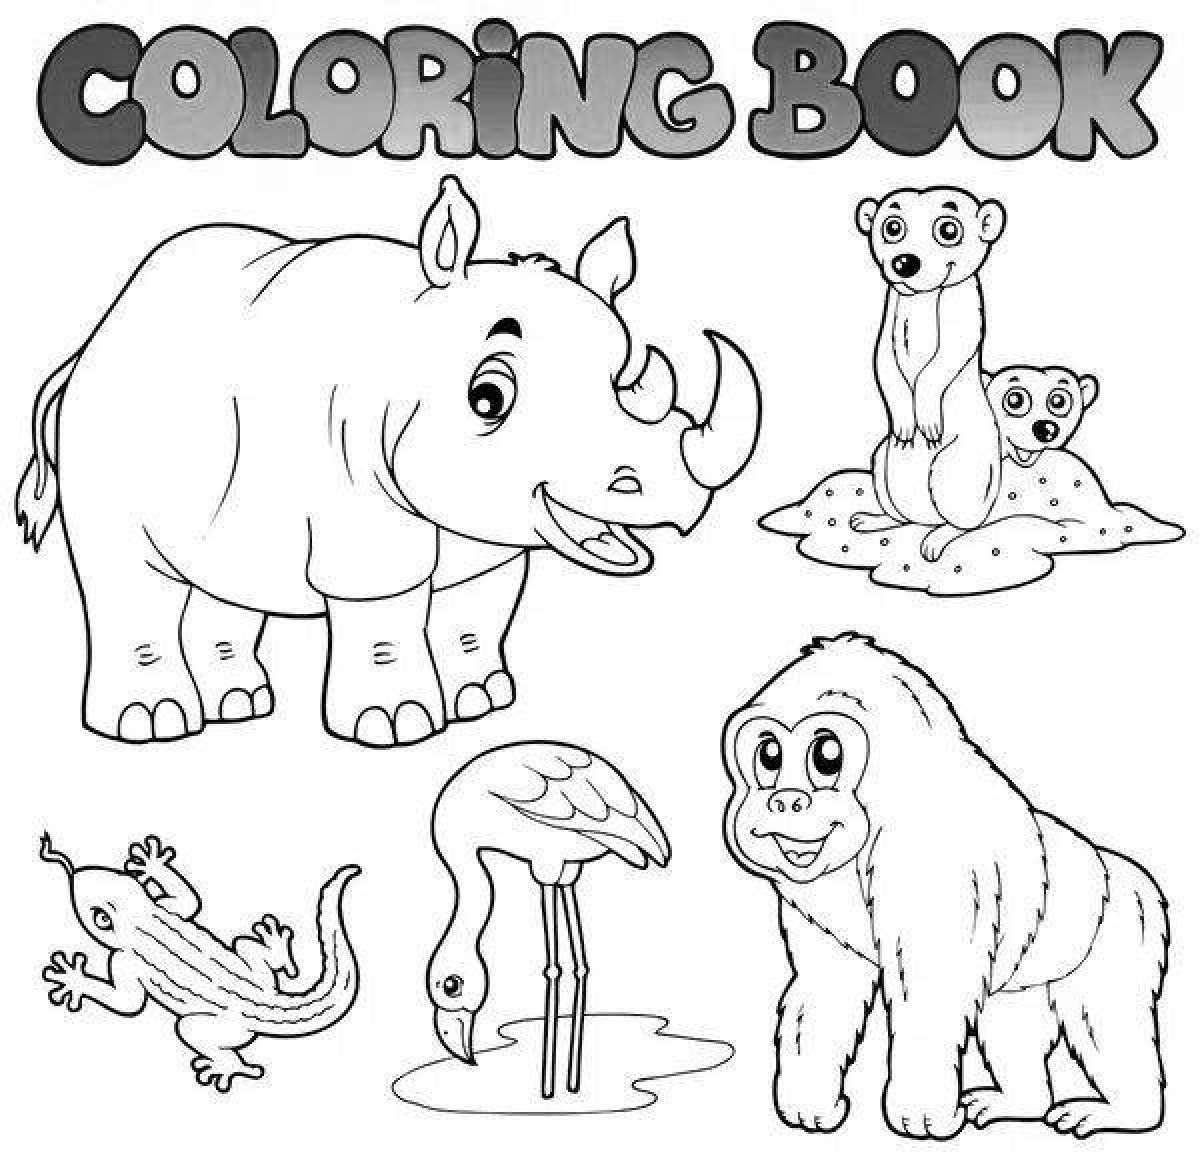 Splendid zoo coloring book for kids